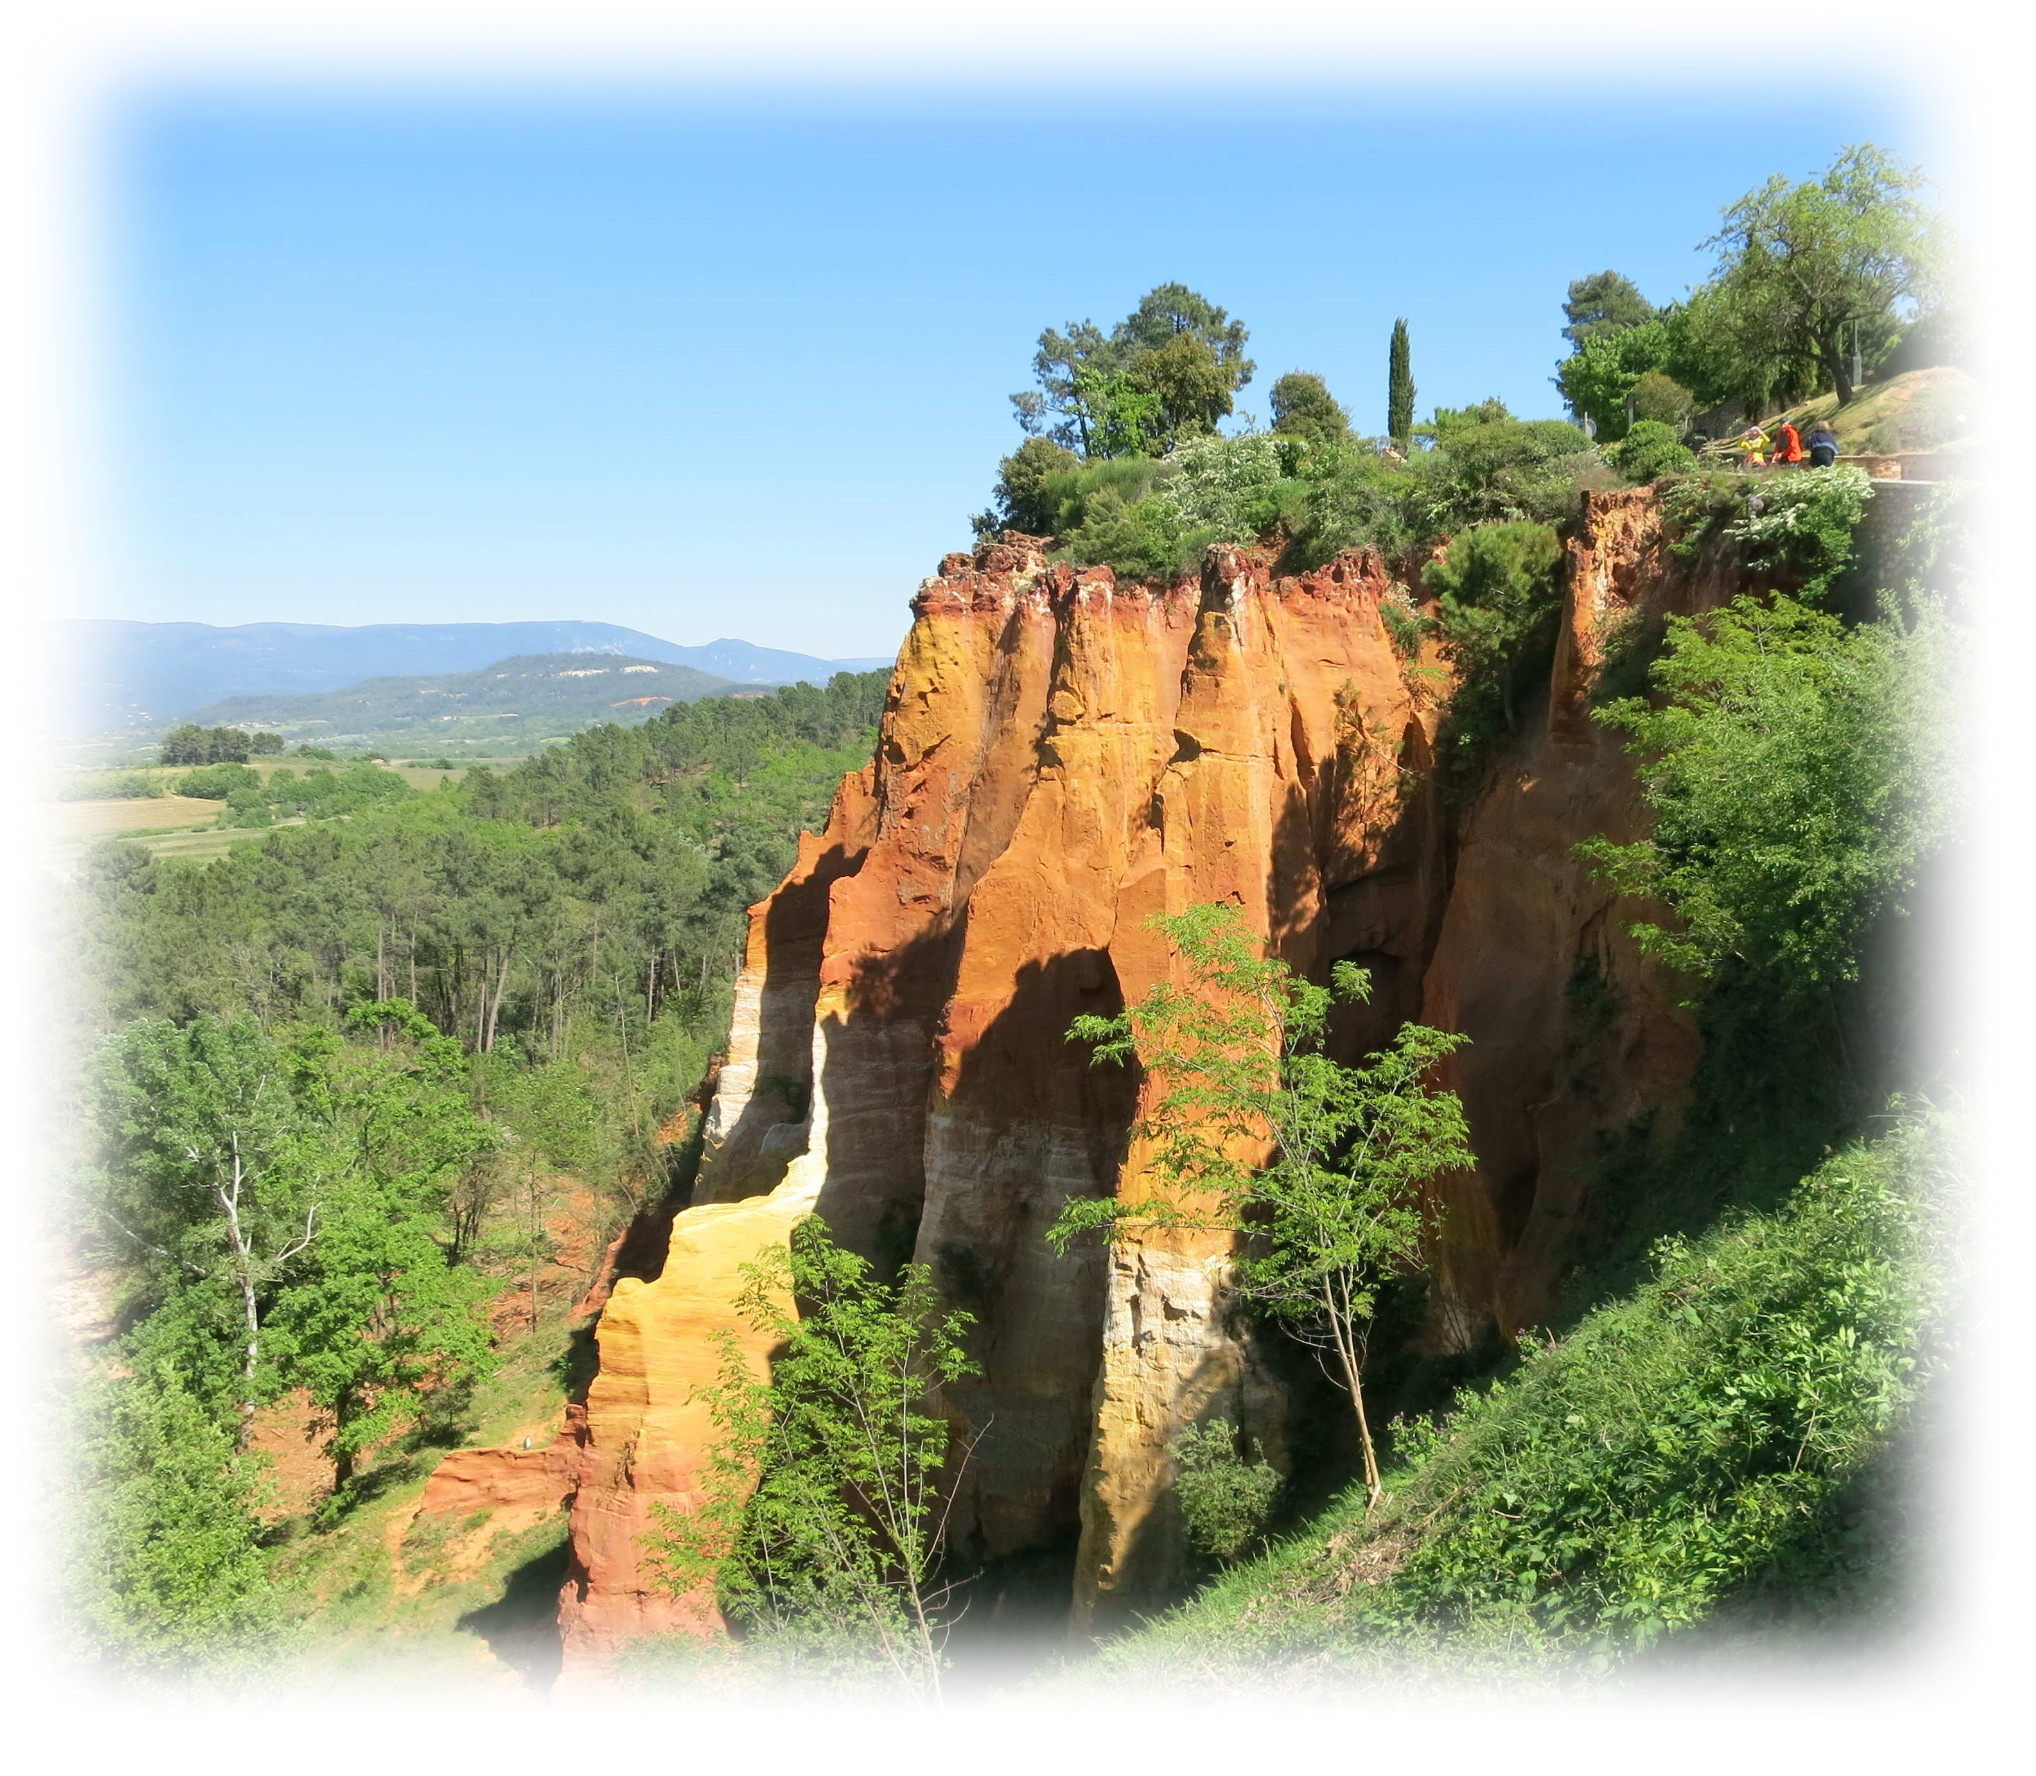 The ochre rocks of Roussillon